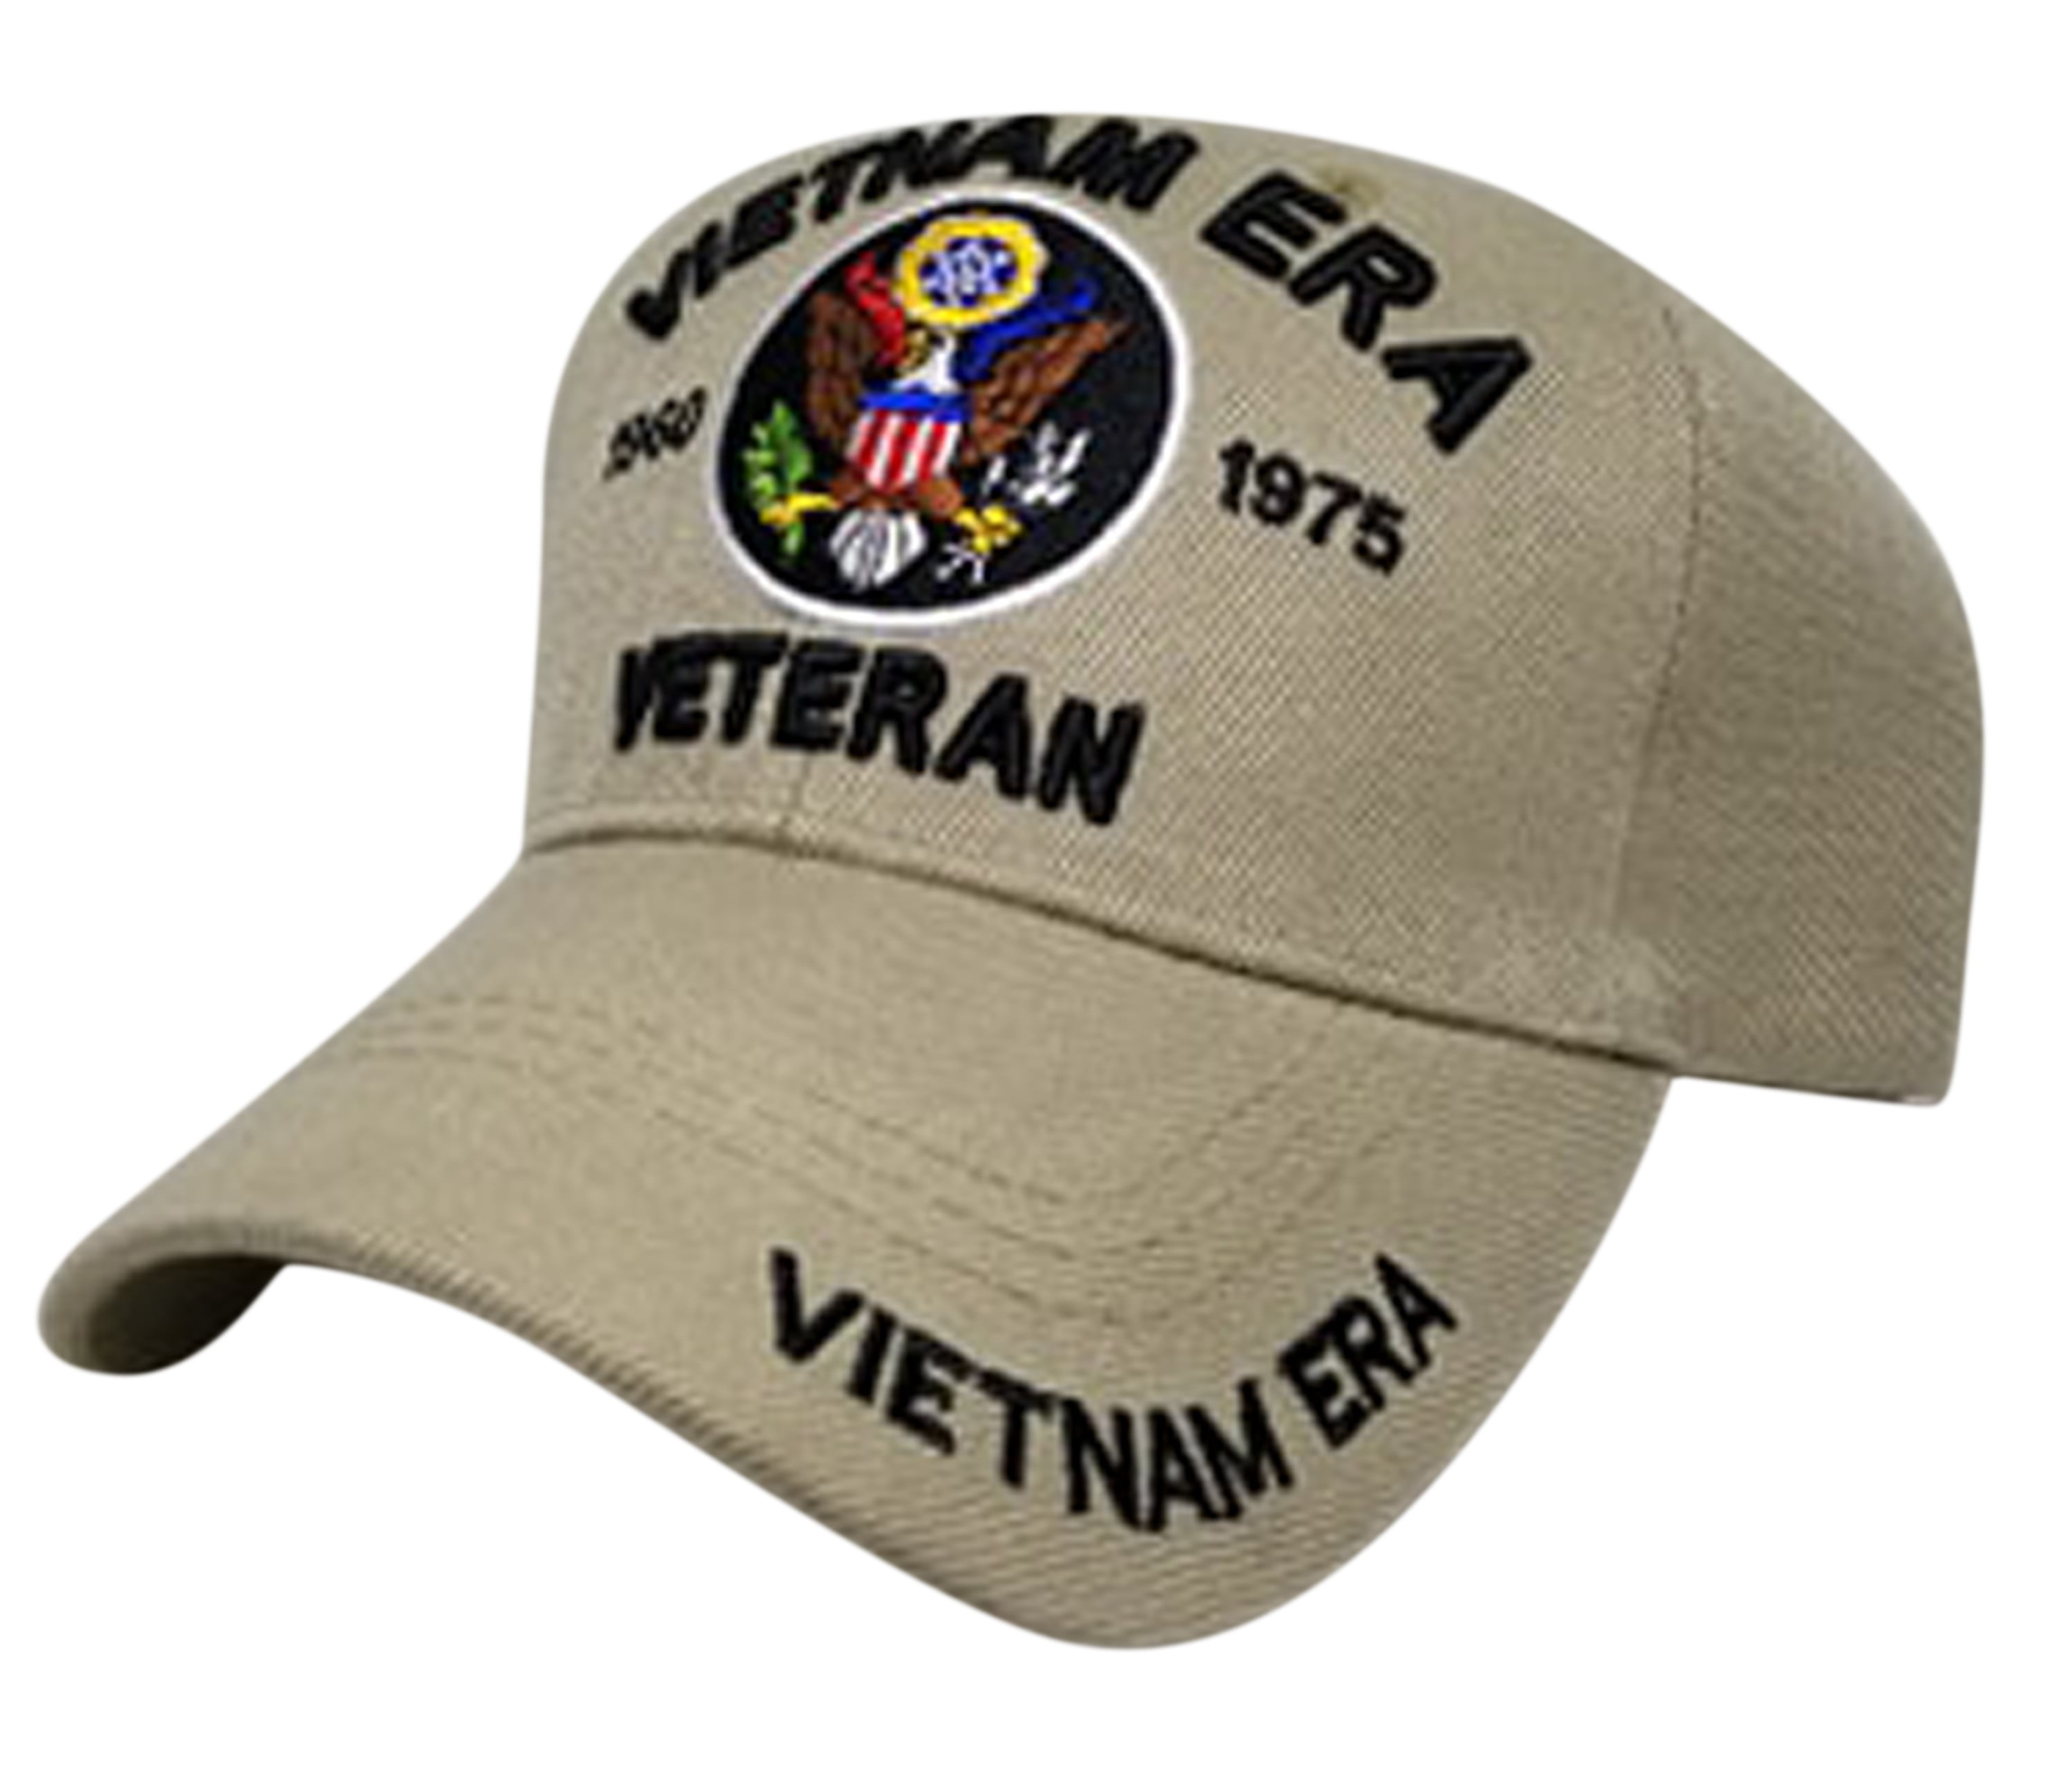 Us Army Vietnam Era Veteran Hat - Army Military